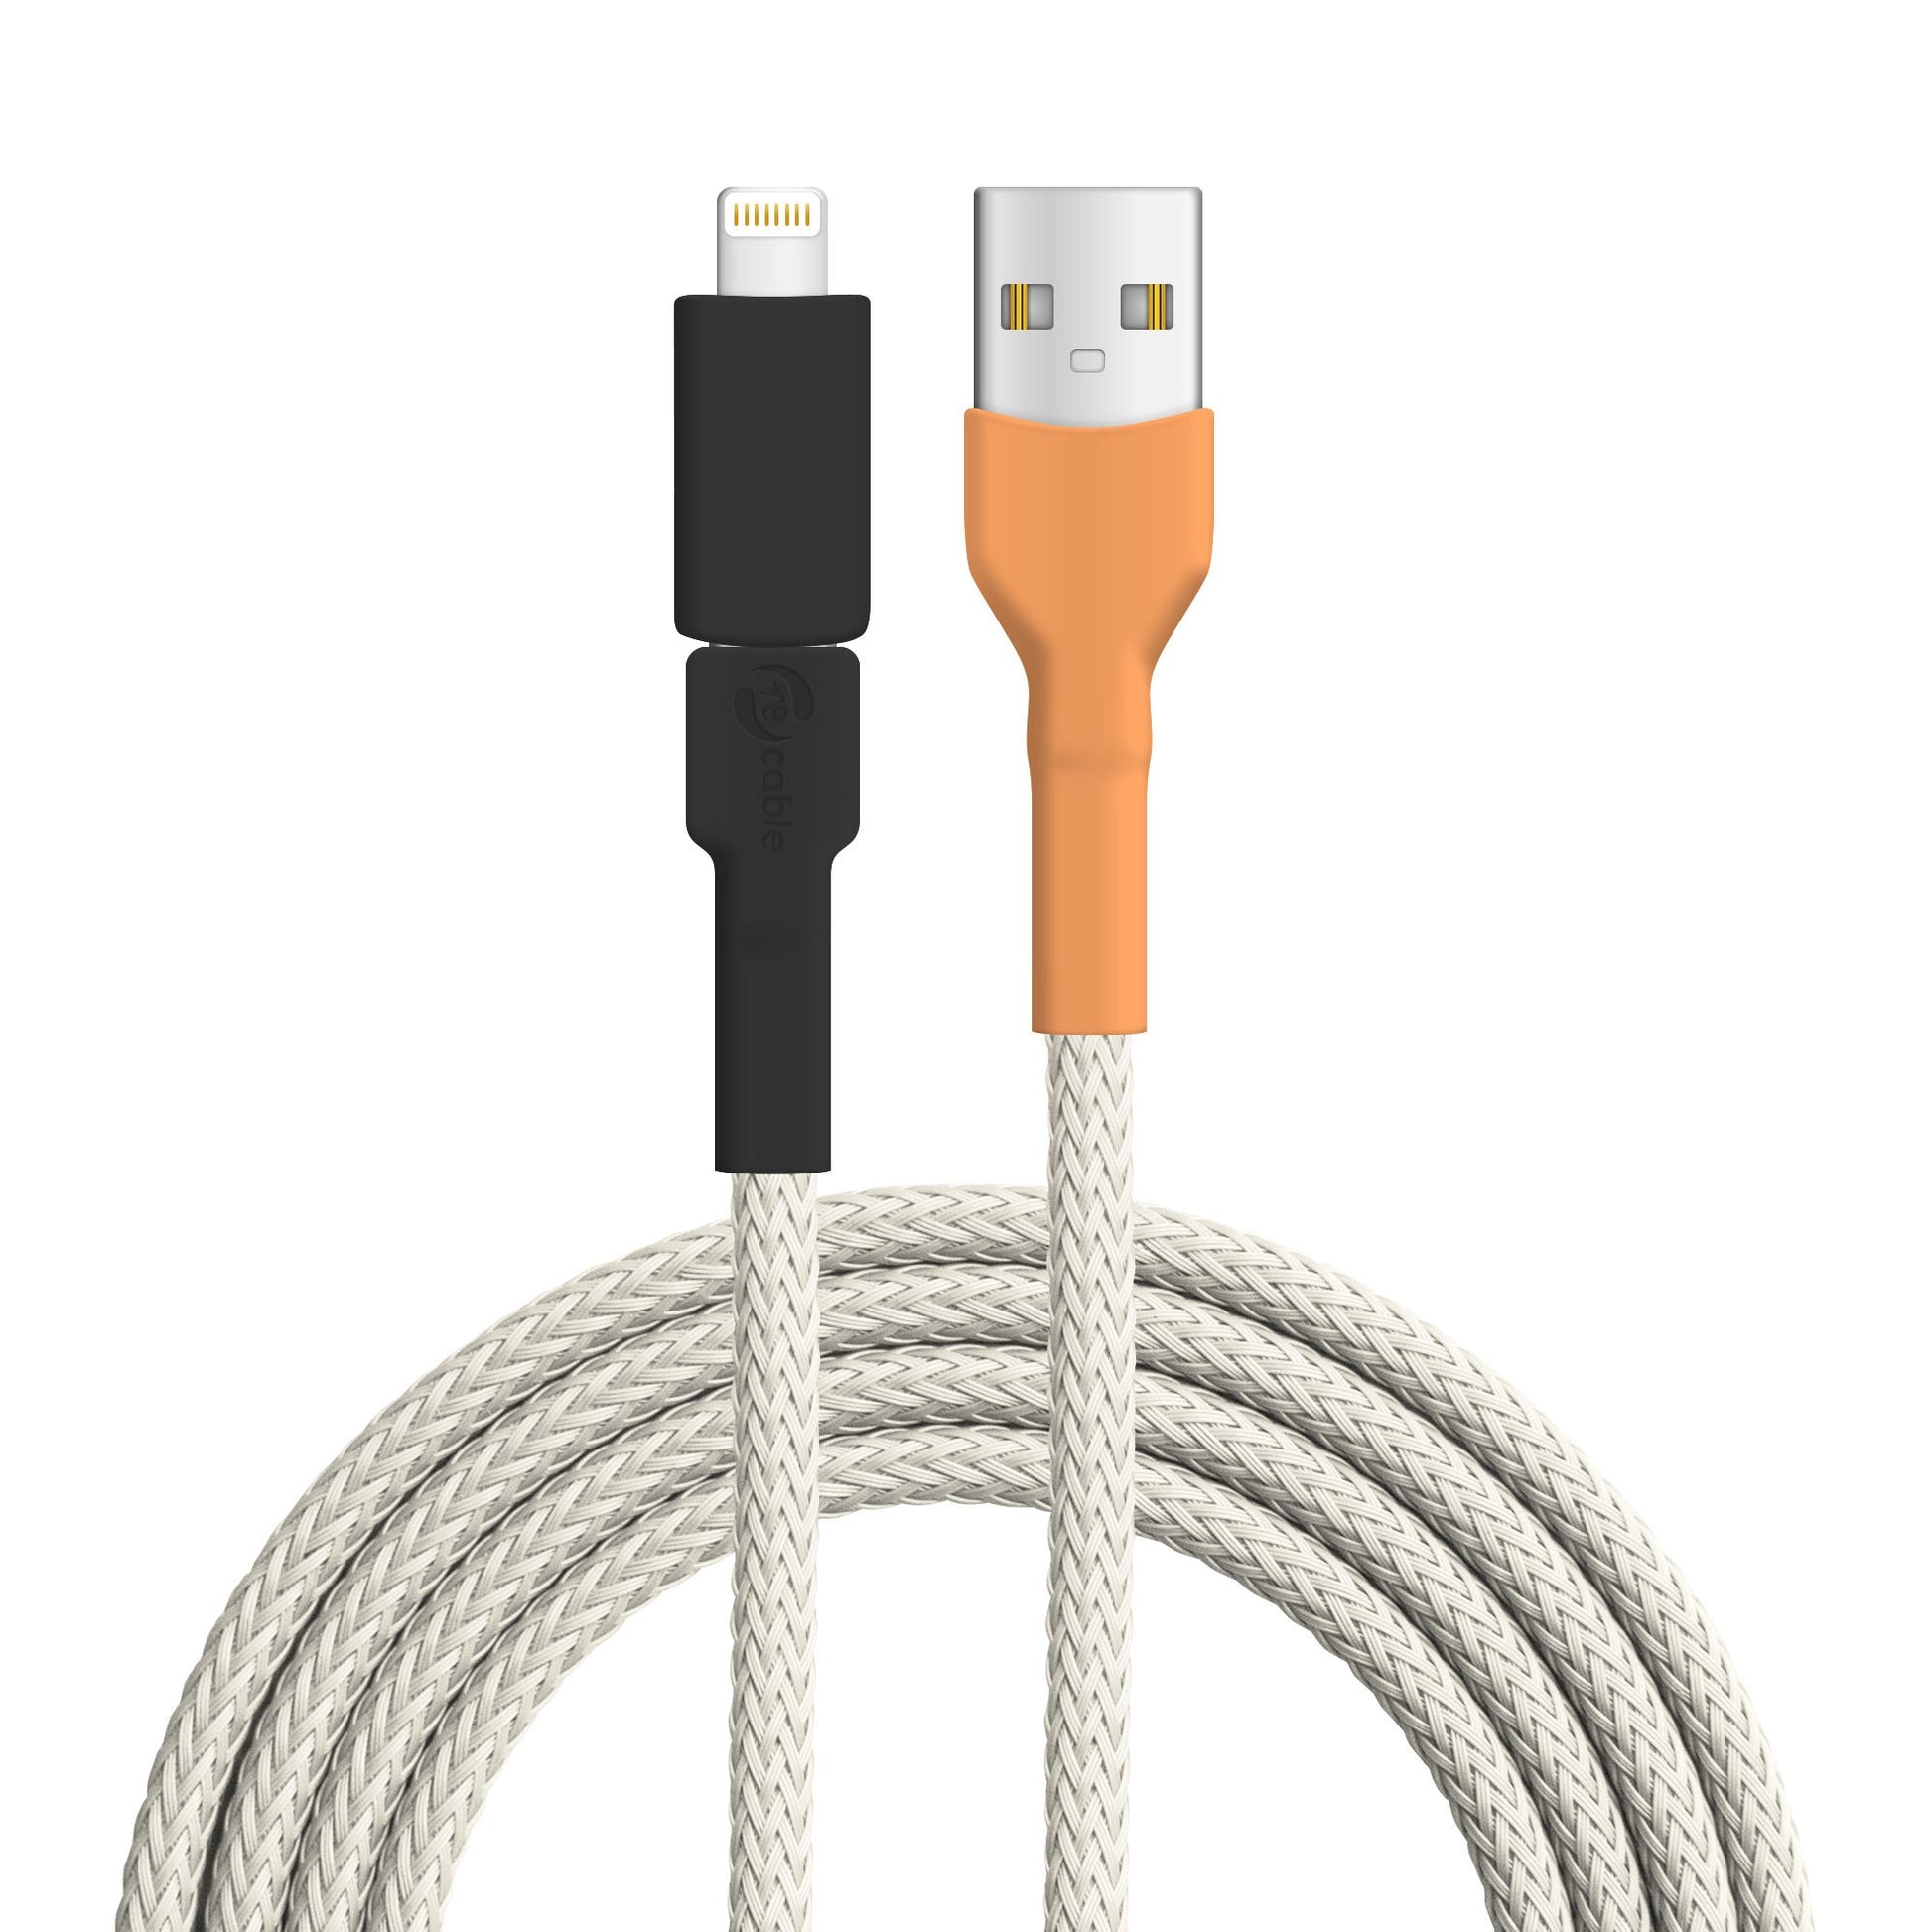 USB-Kabel, Design: Königs­pinguin, Anschlüsse: USB A auf Micro-USB mit Lightning Adapter (verbunden)